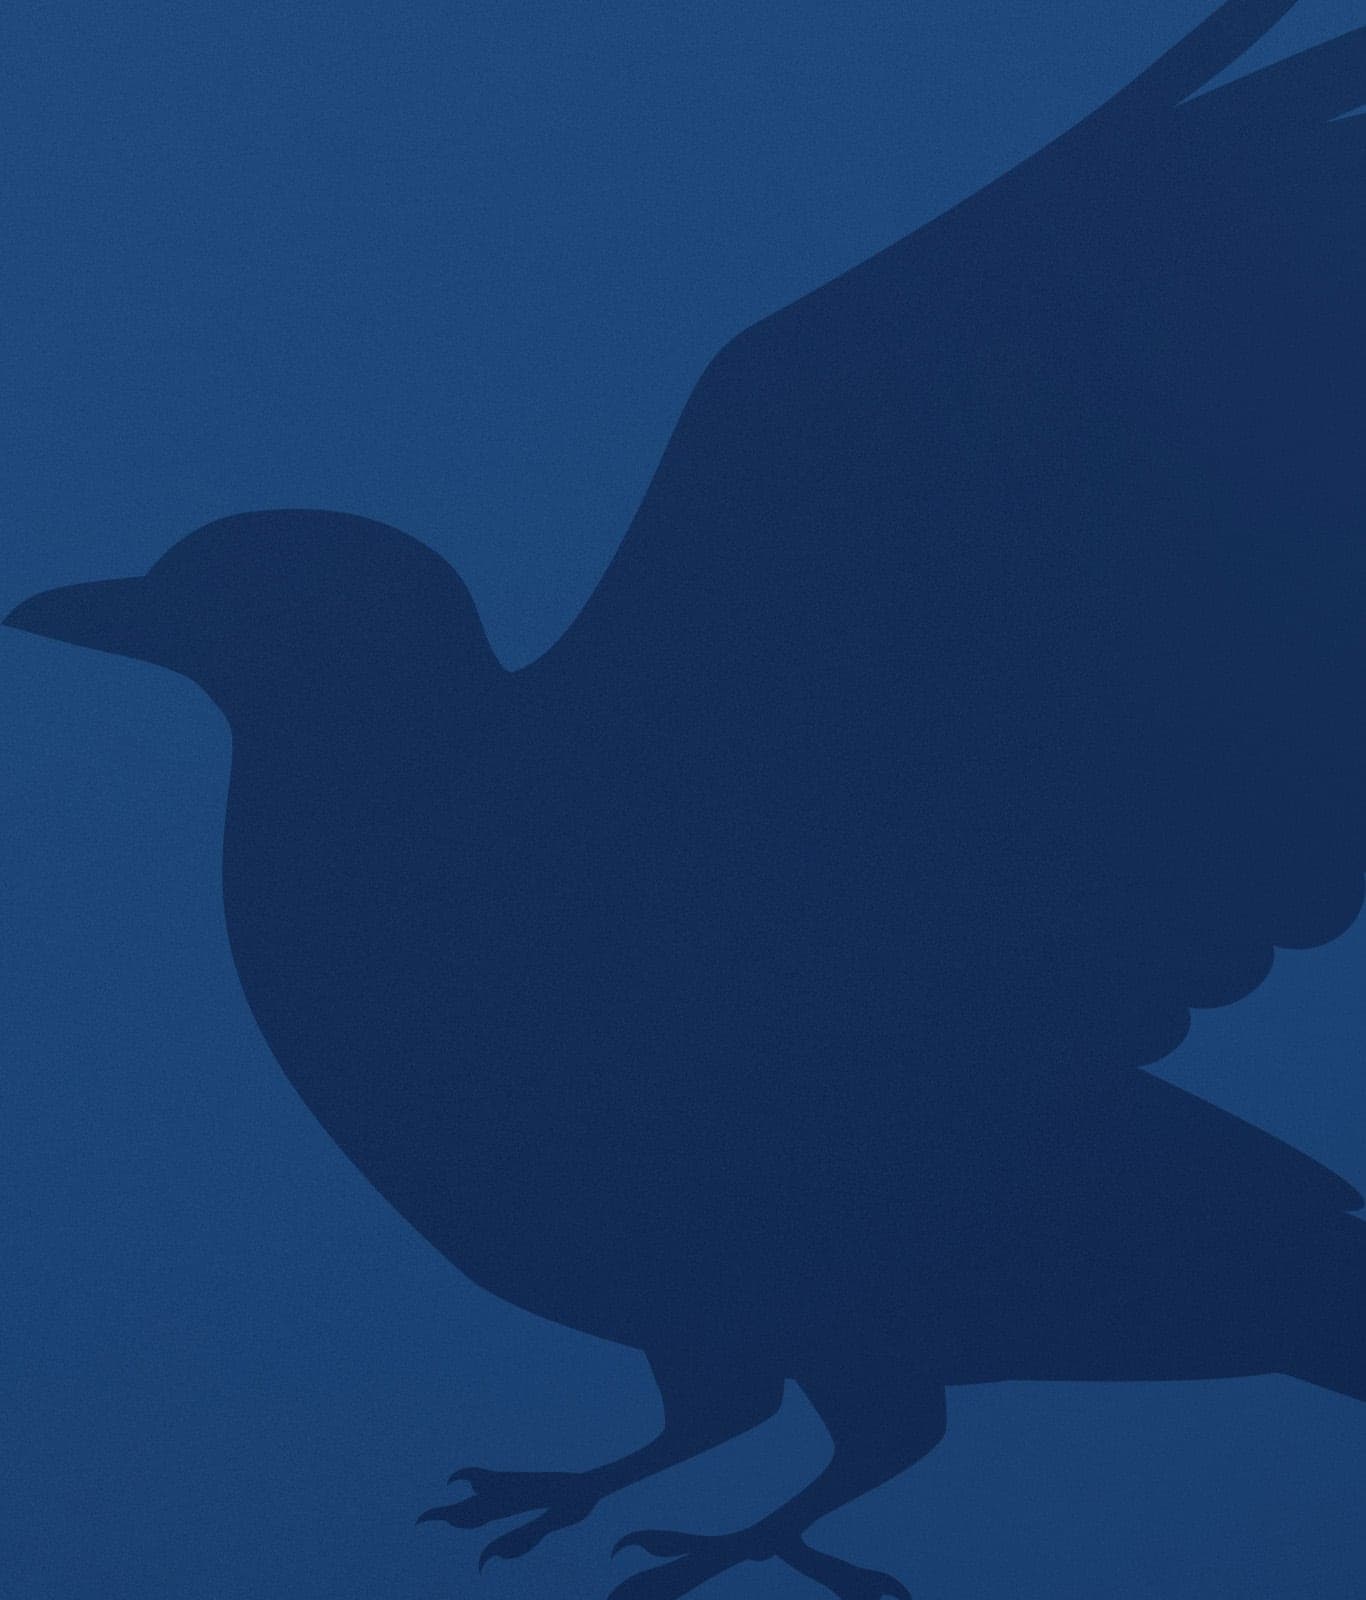 Le corbeau de Serdaigle sur un fond bleu.